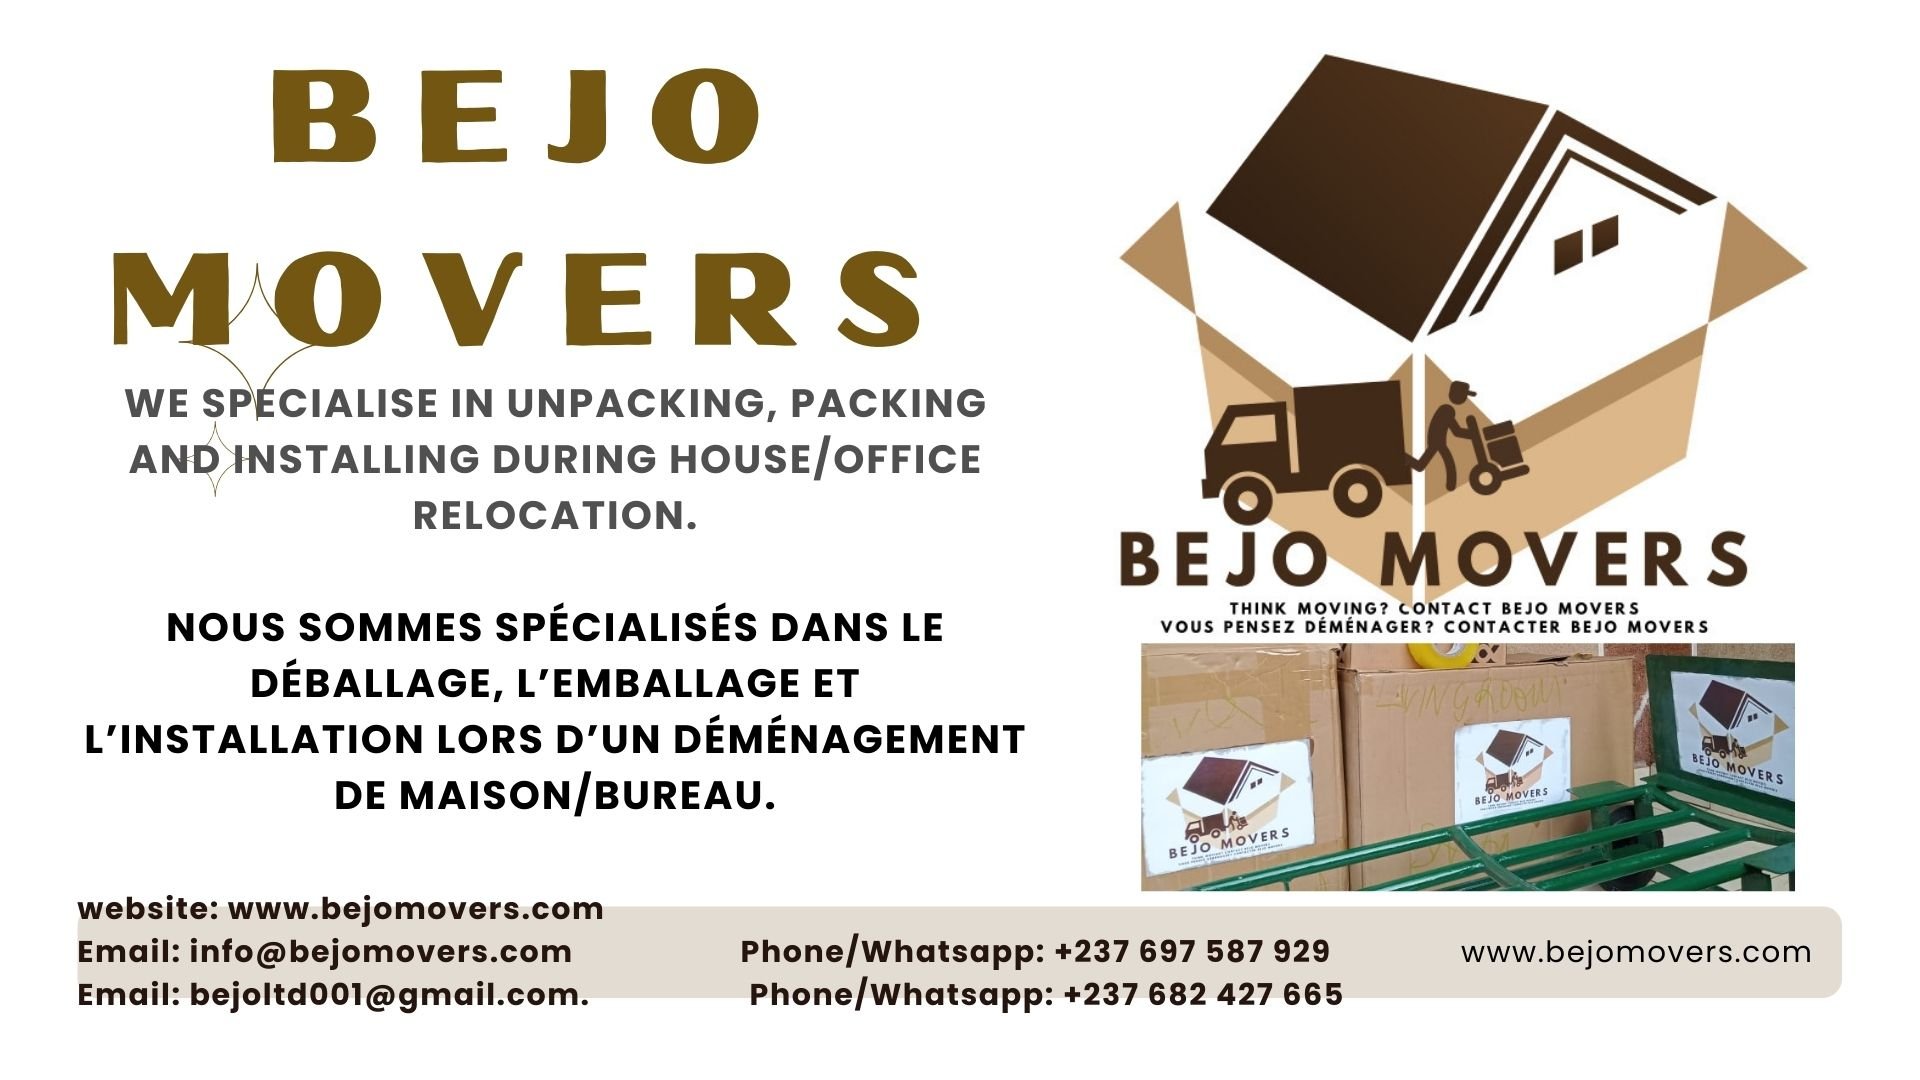 BEJO MOVERS